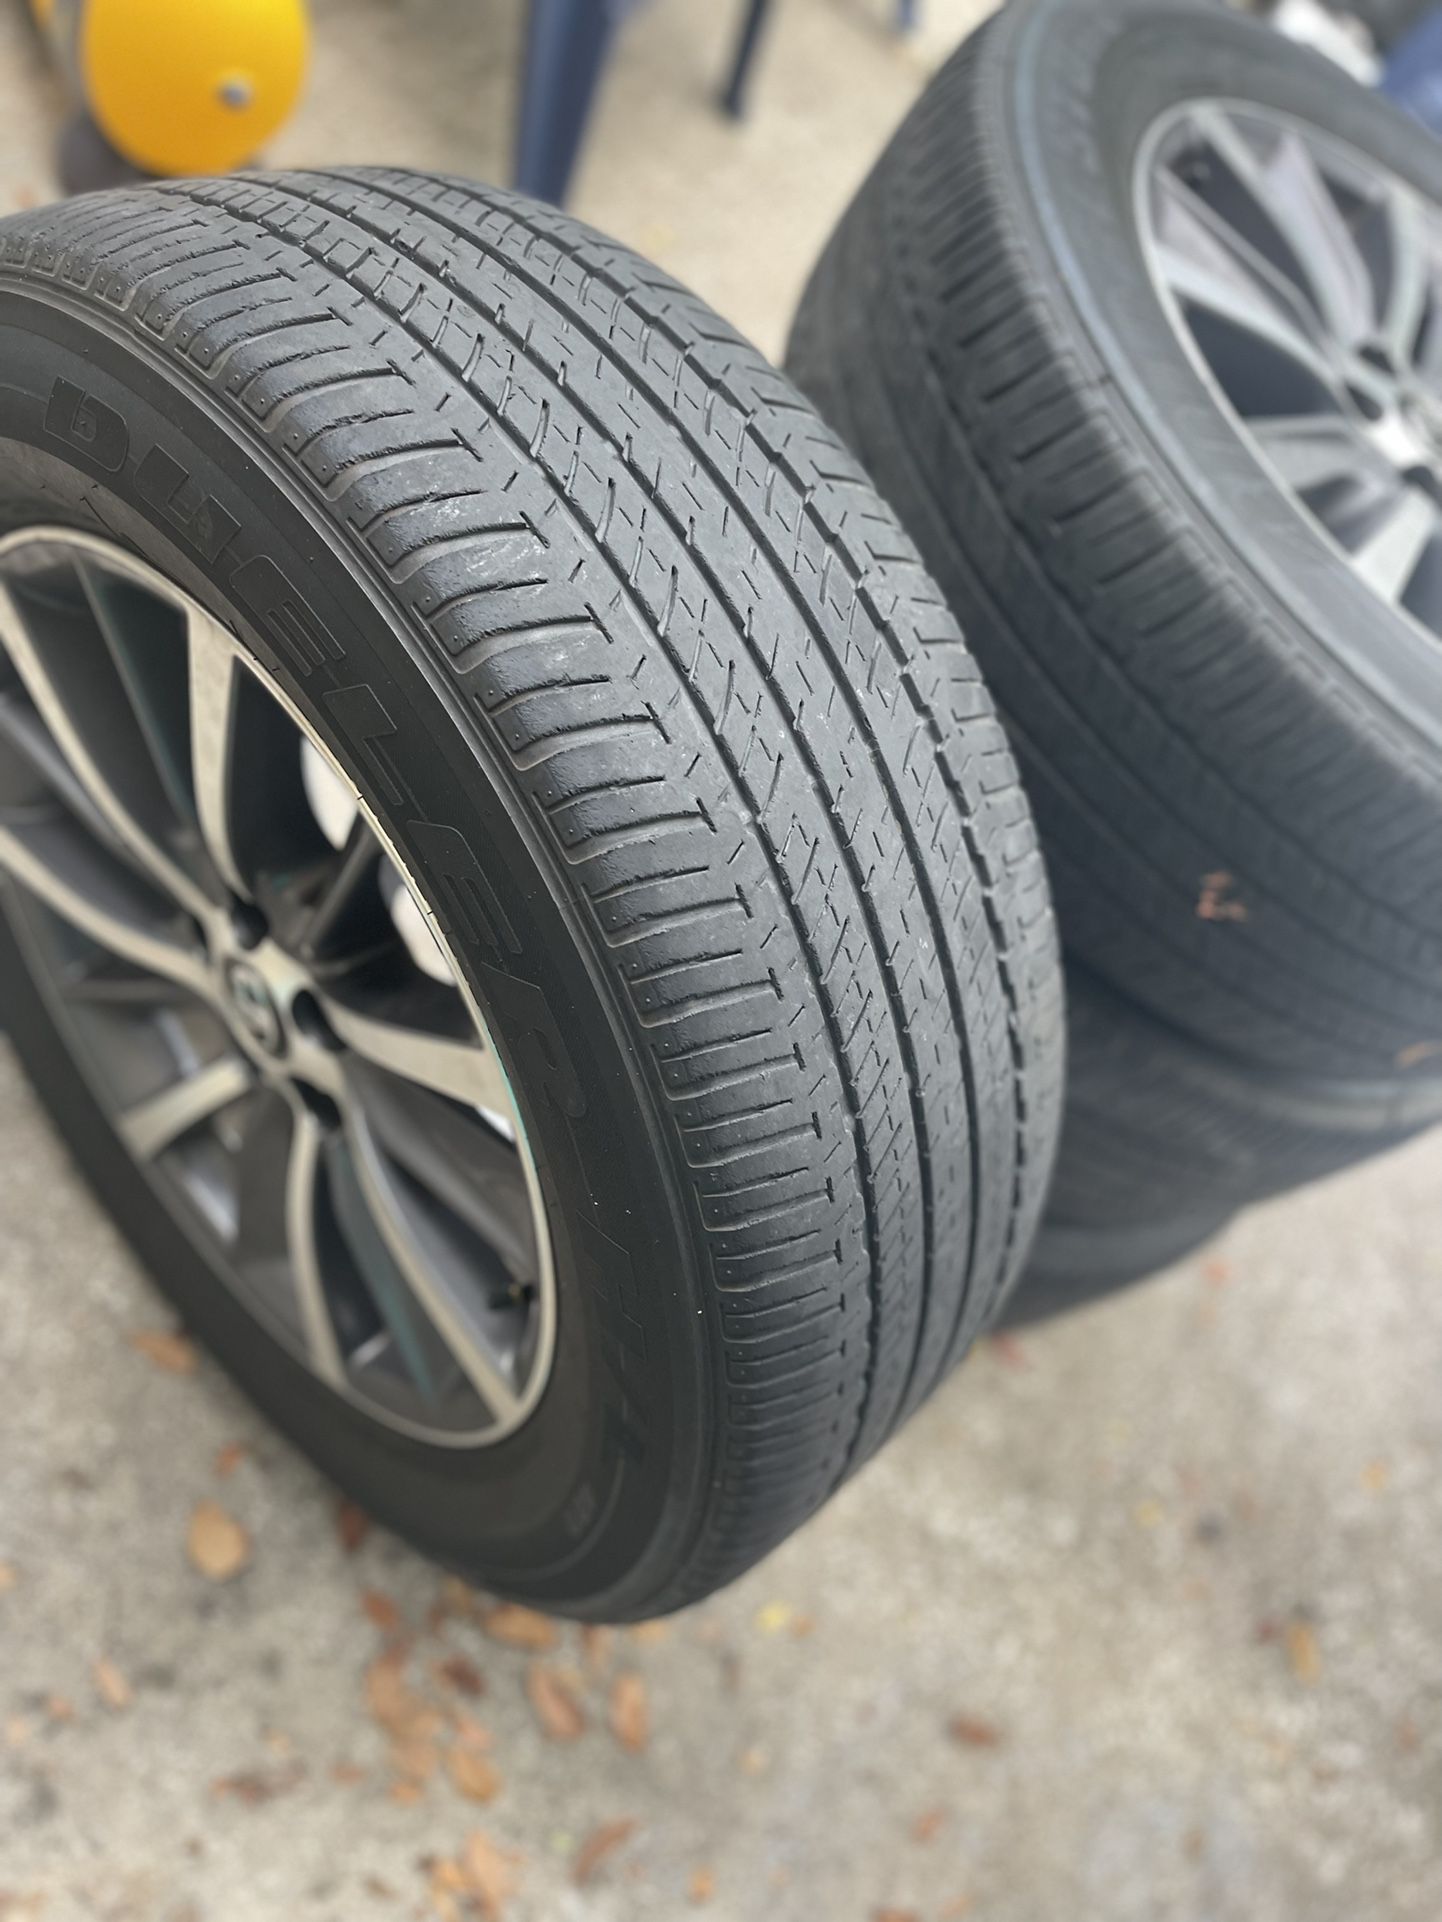 2018 Highlander Wheels and Tires